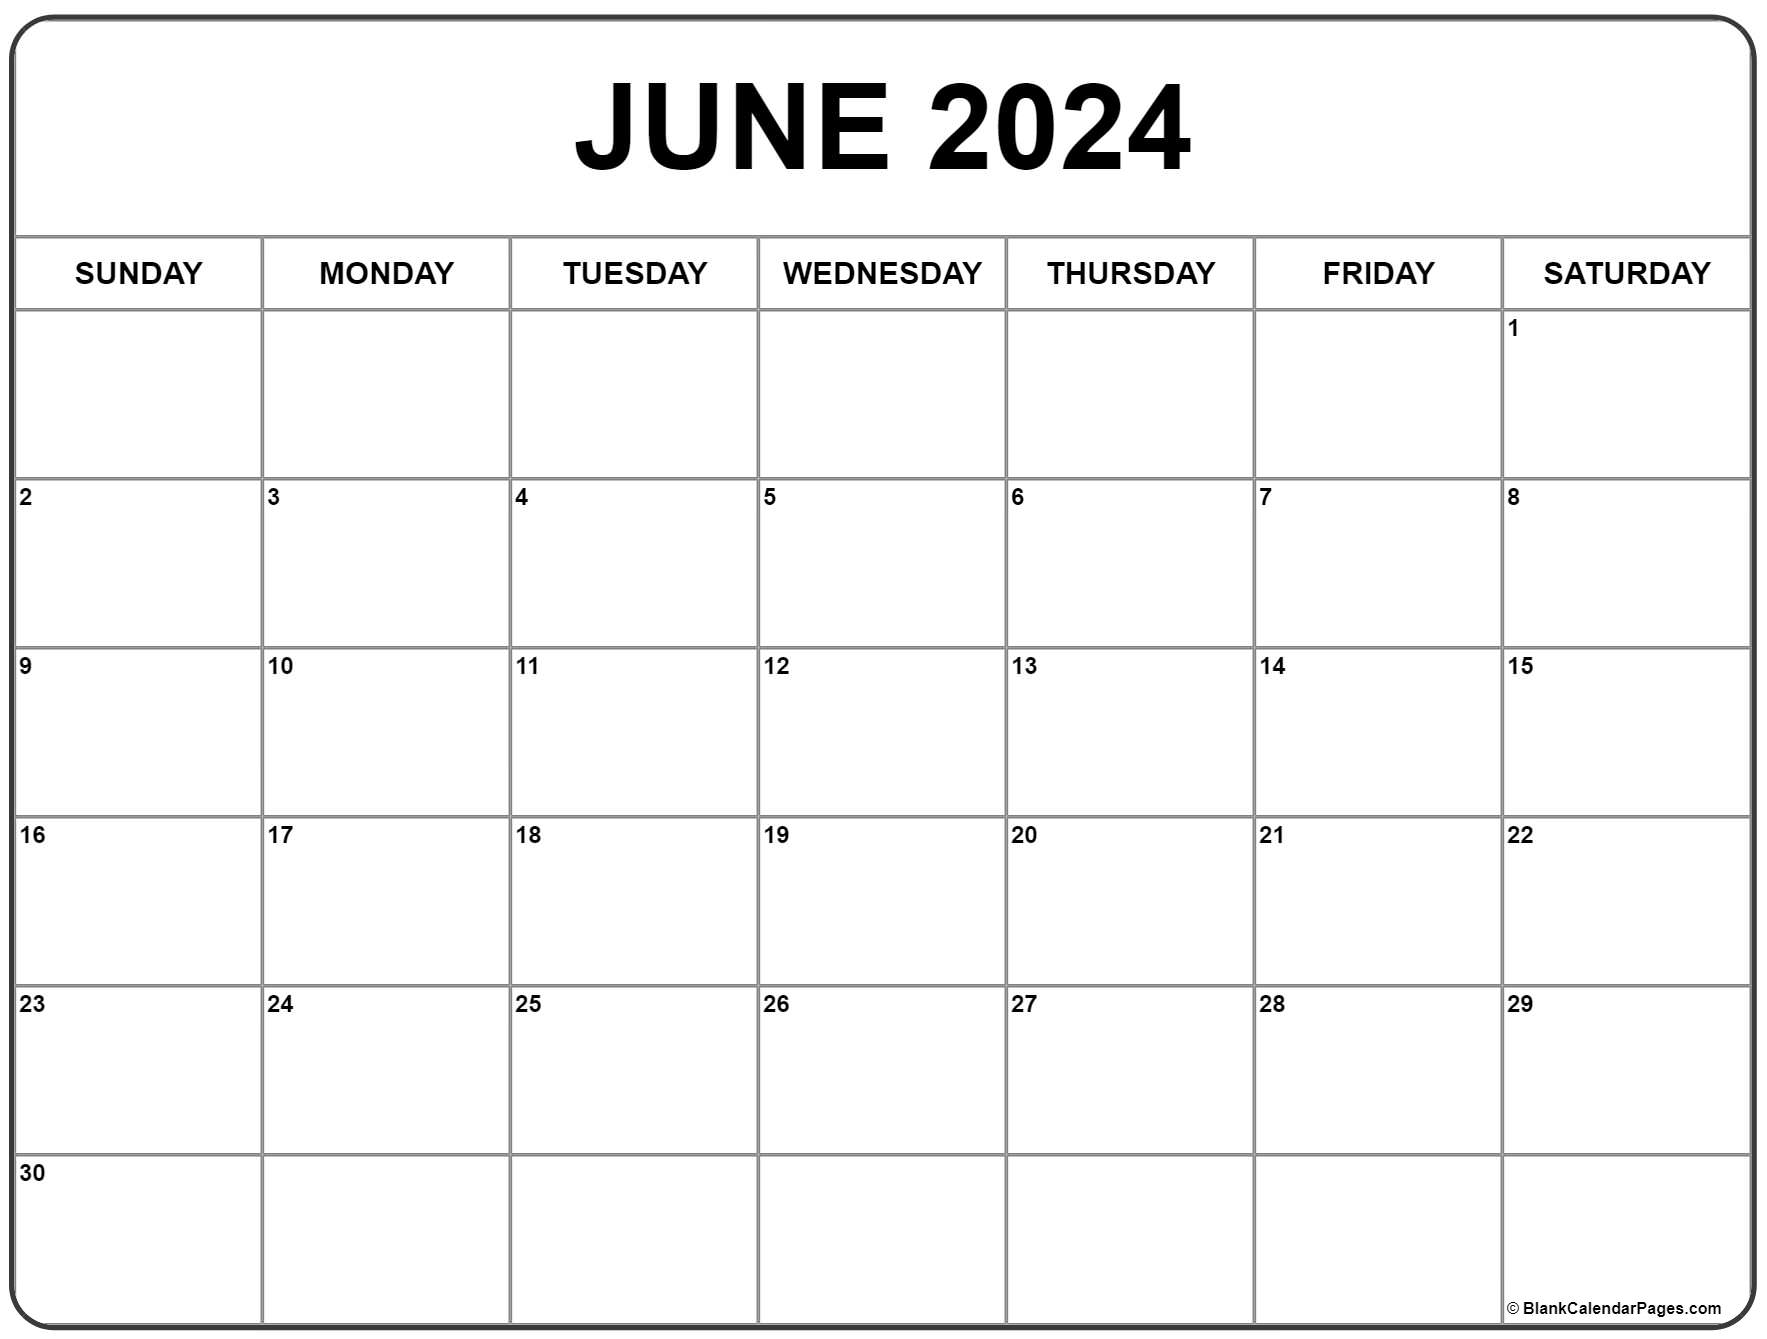 June 2024 Calendar | Free Printable Calendar for Free June 2024 Calendar Printable Free